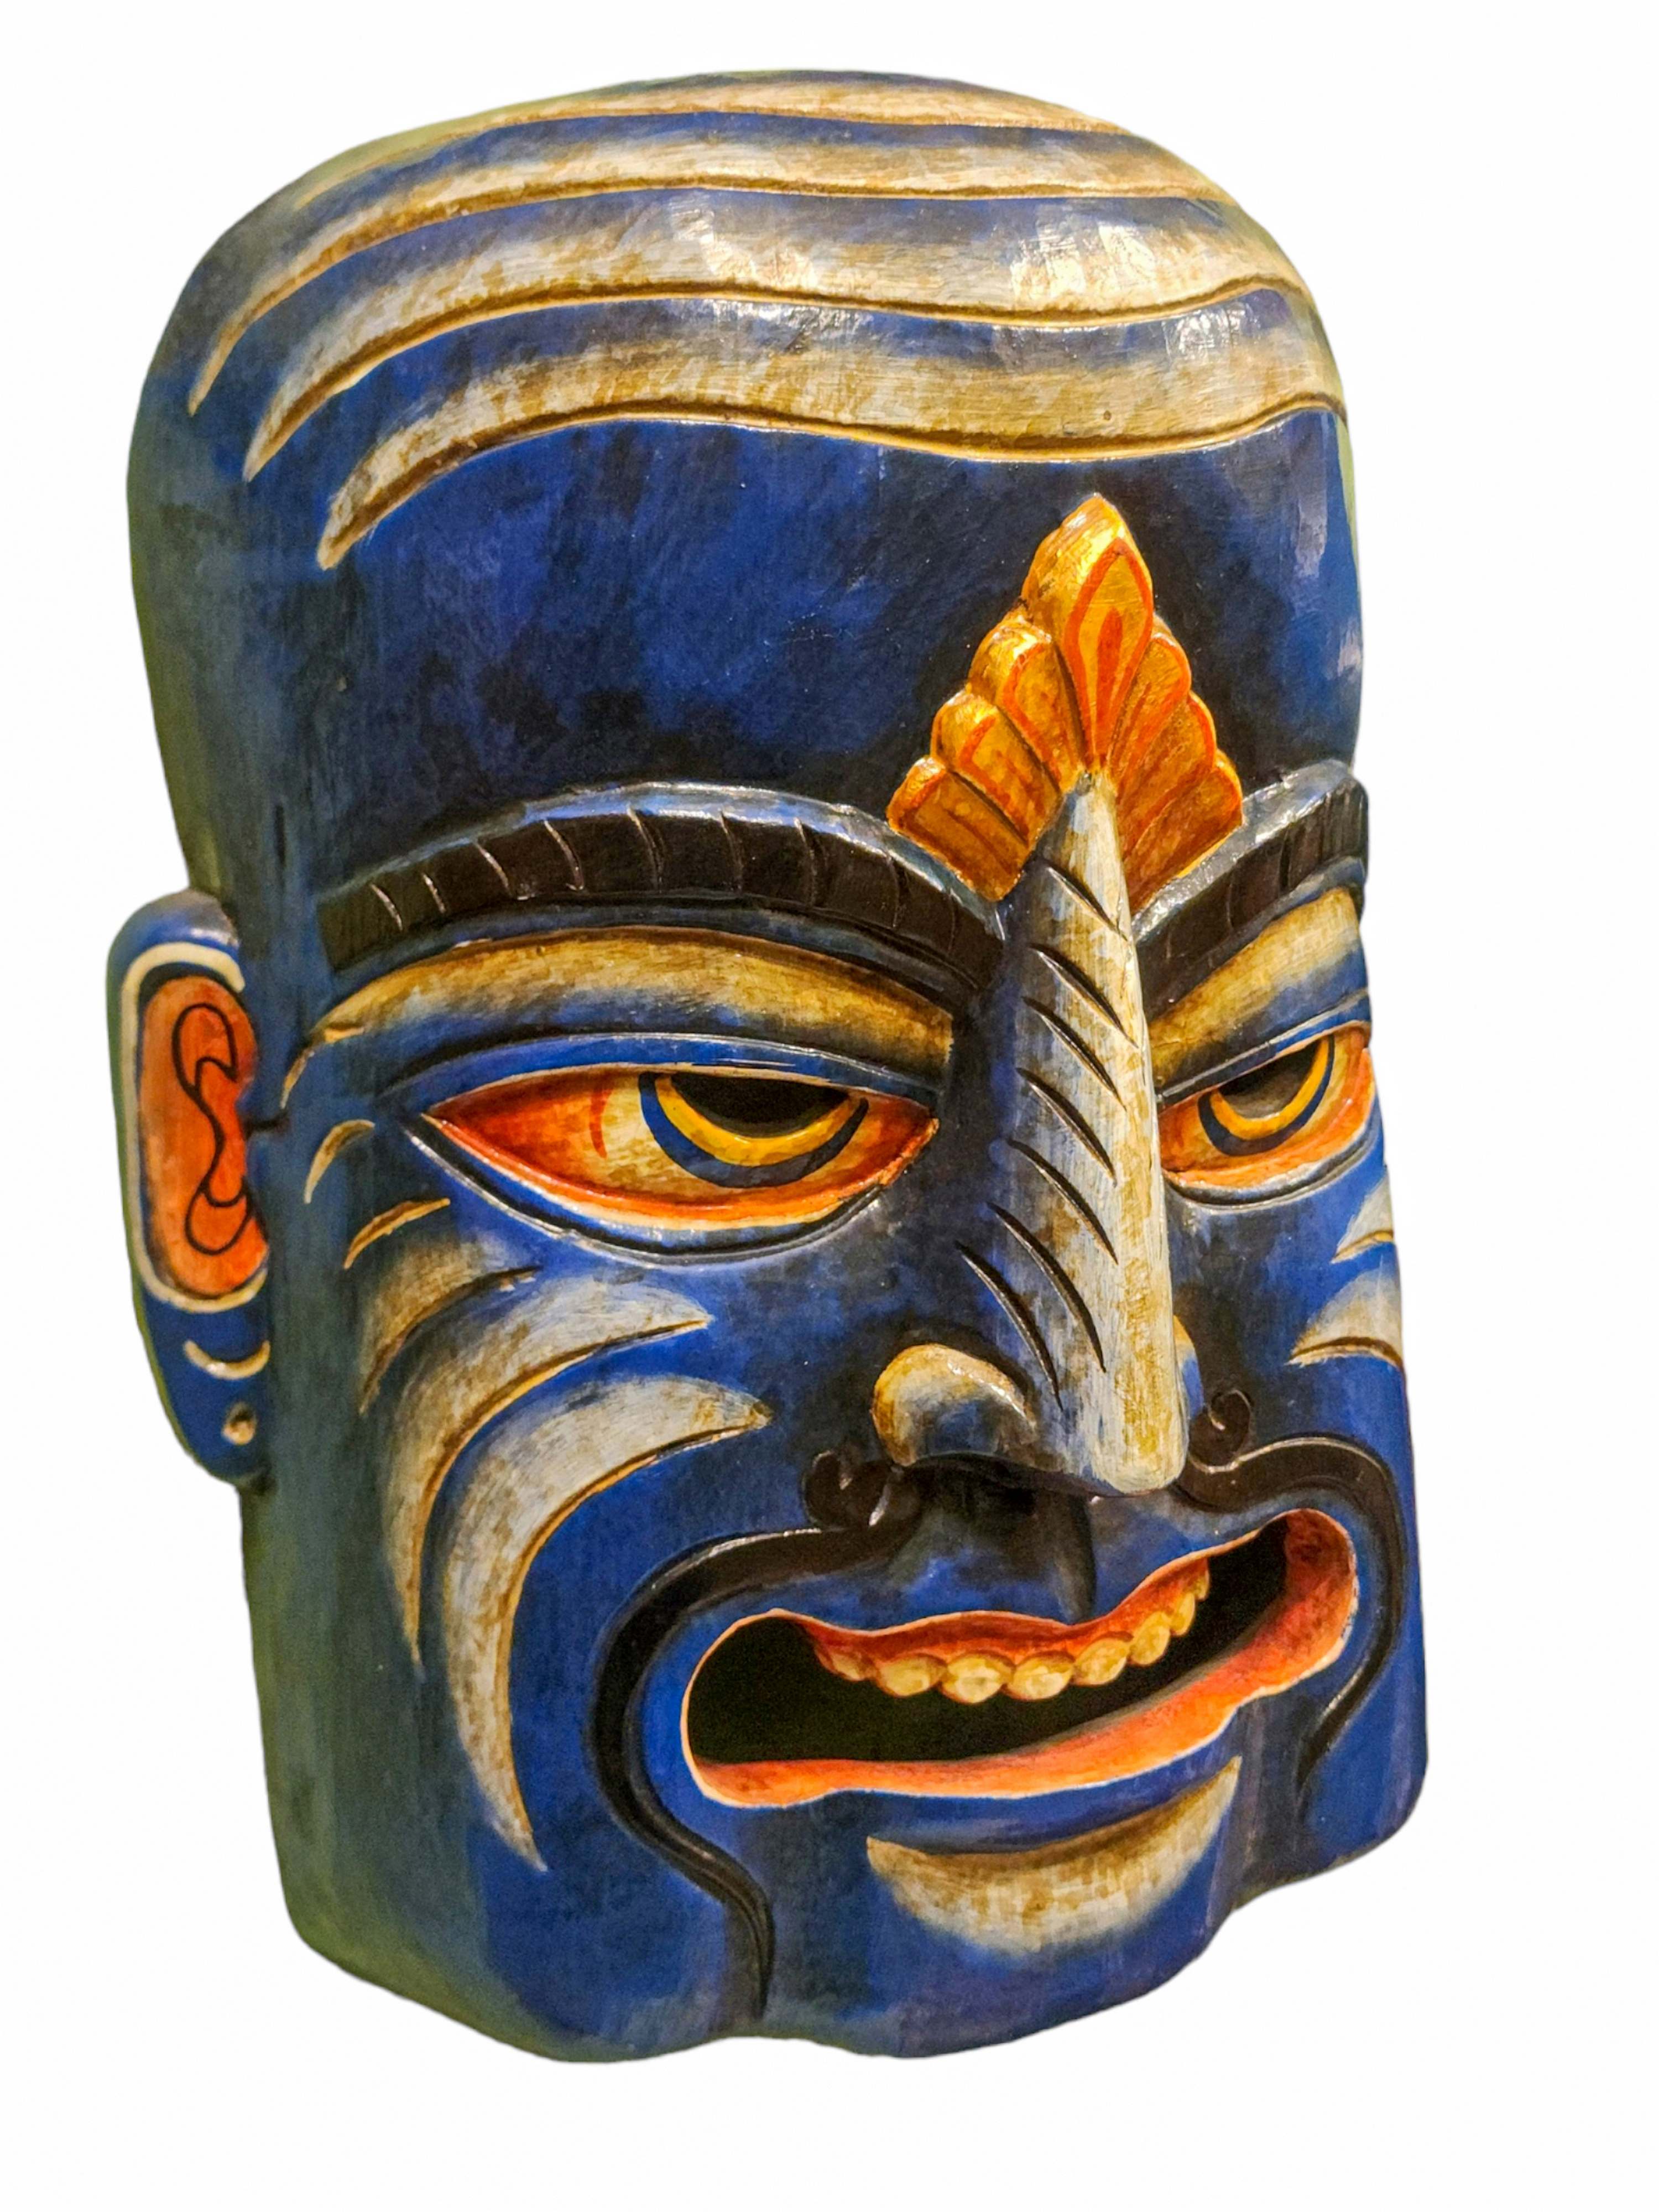 tribal Mask, Handmade Wooden Mask, Wall Hanging, painted, Poplar Wood